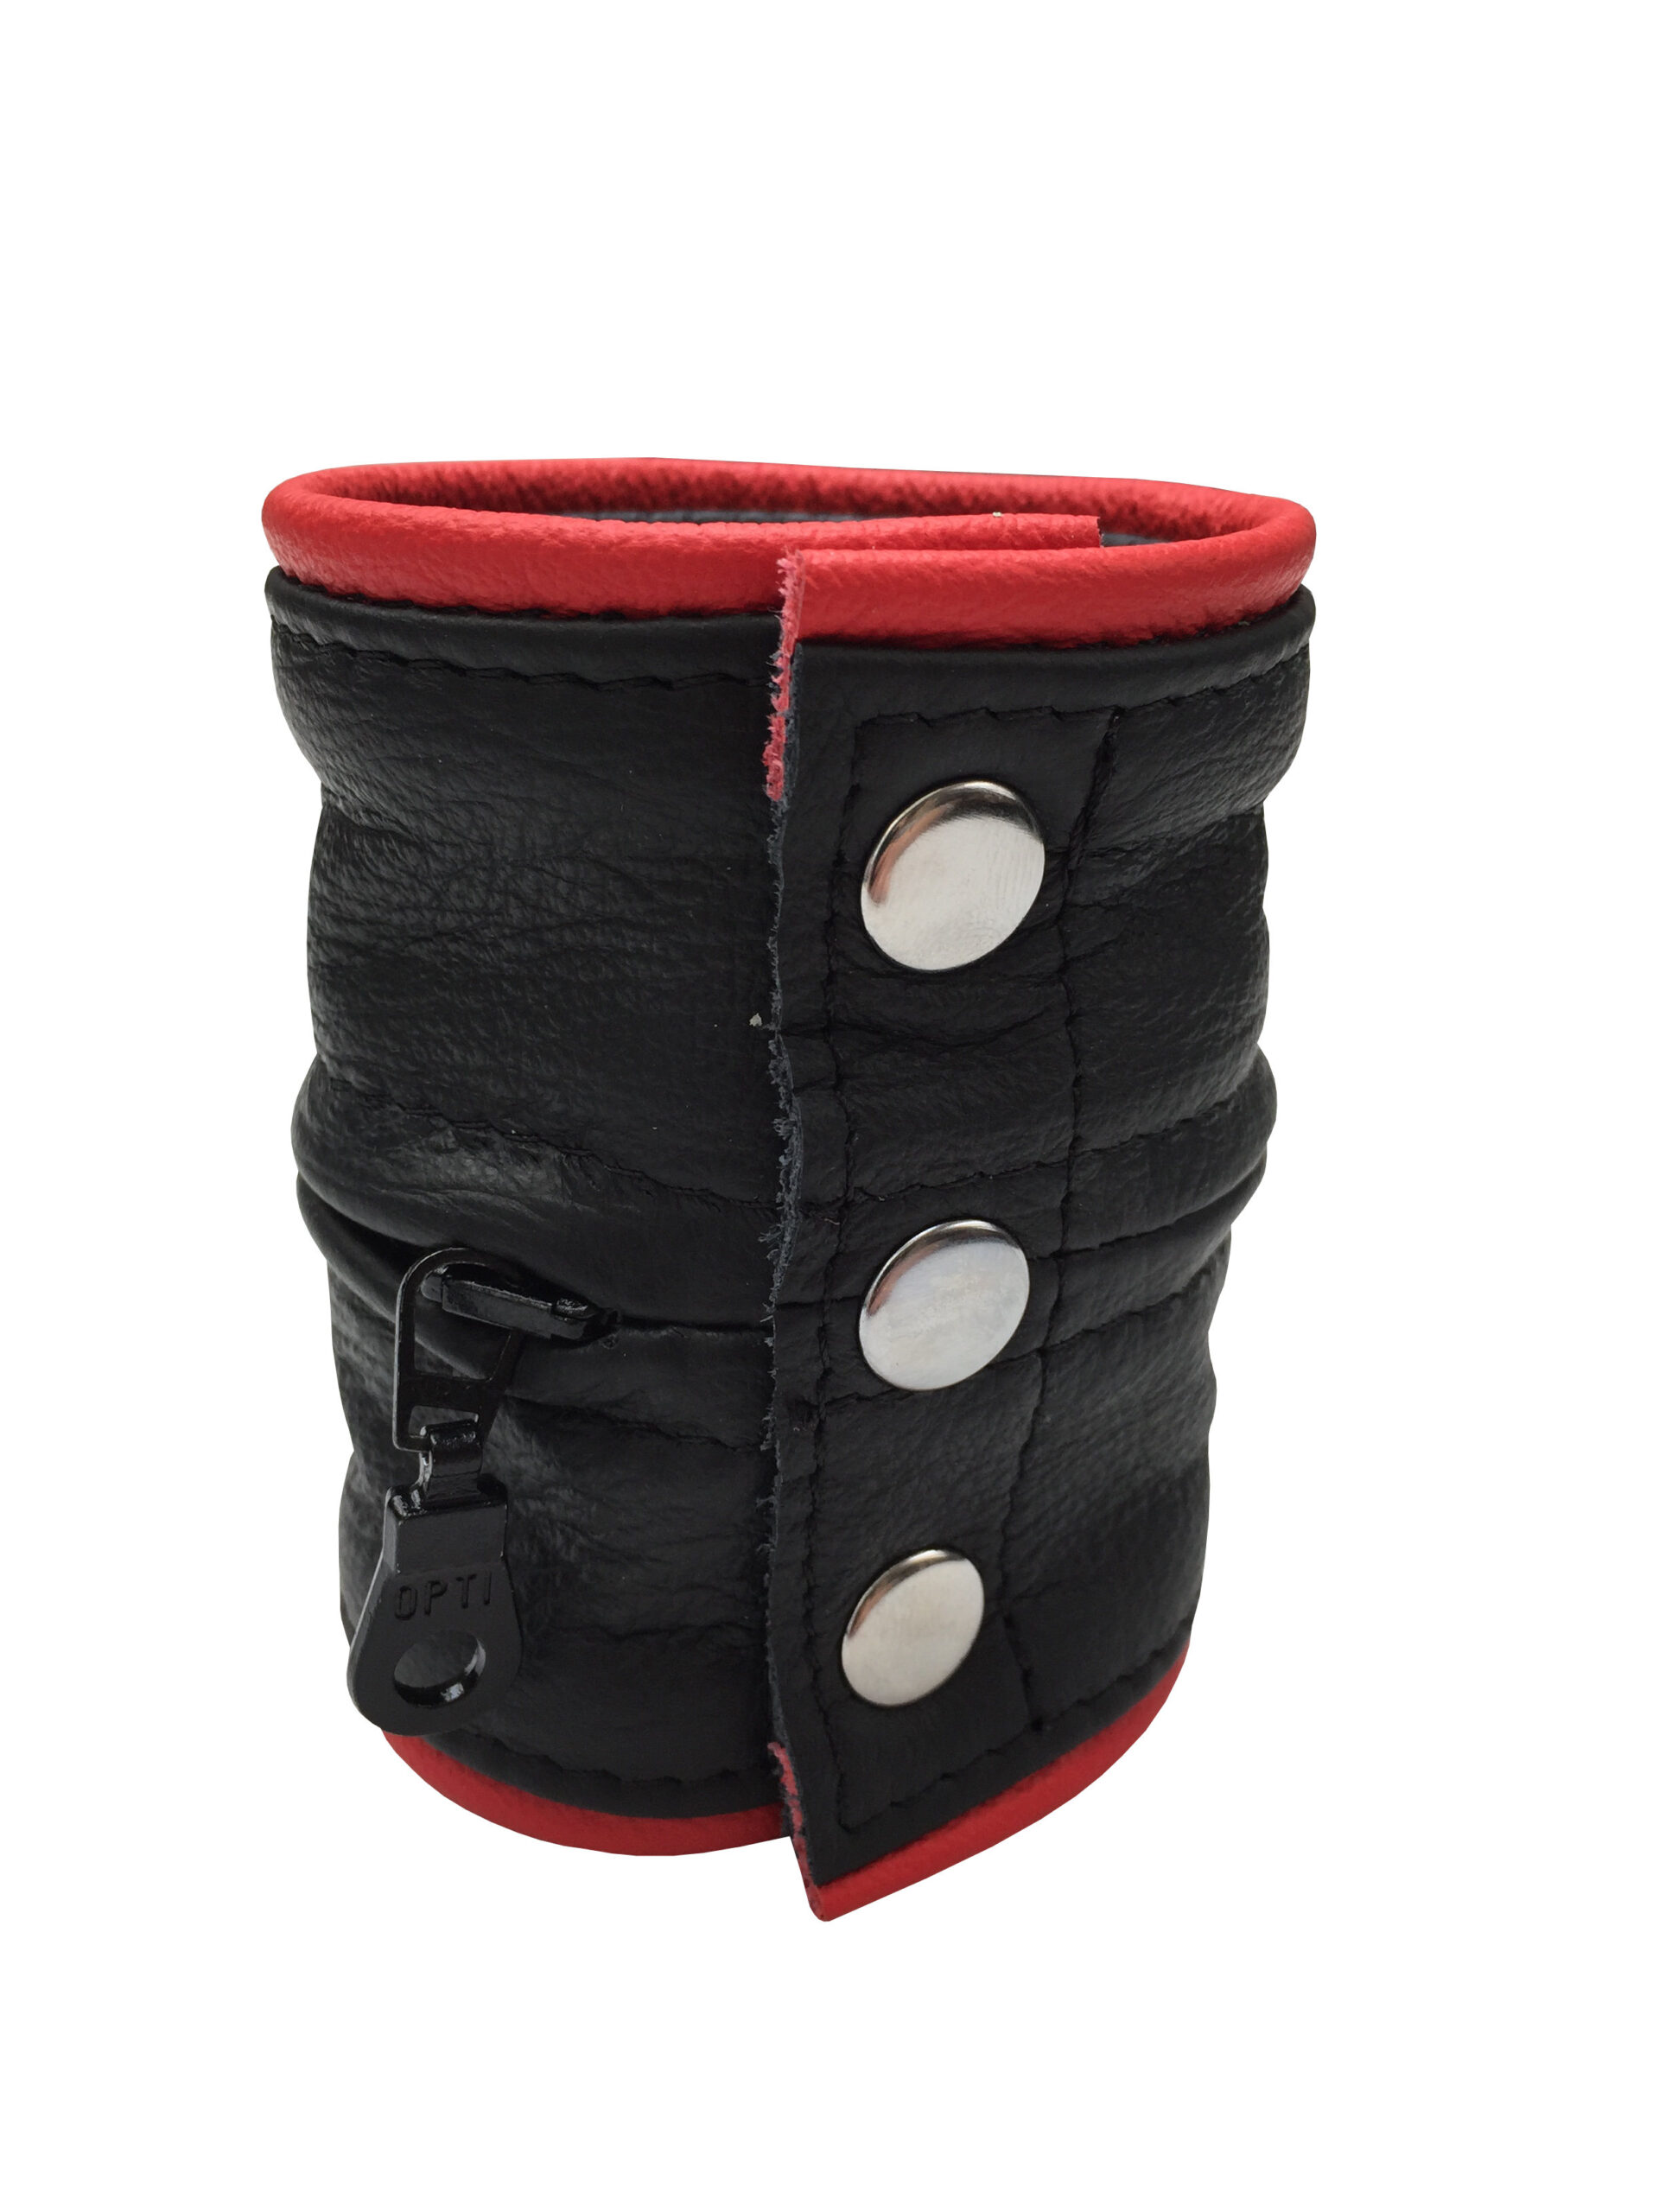 Leather-bracelet-wallet-red-134-KIO-0190-1